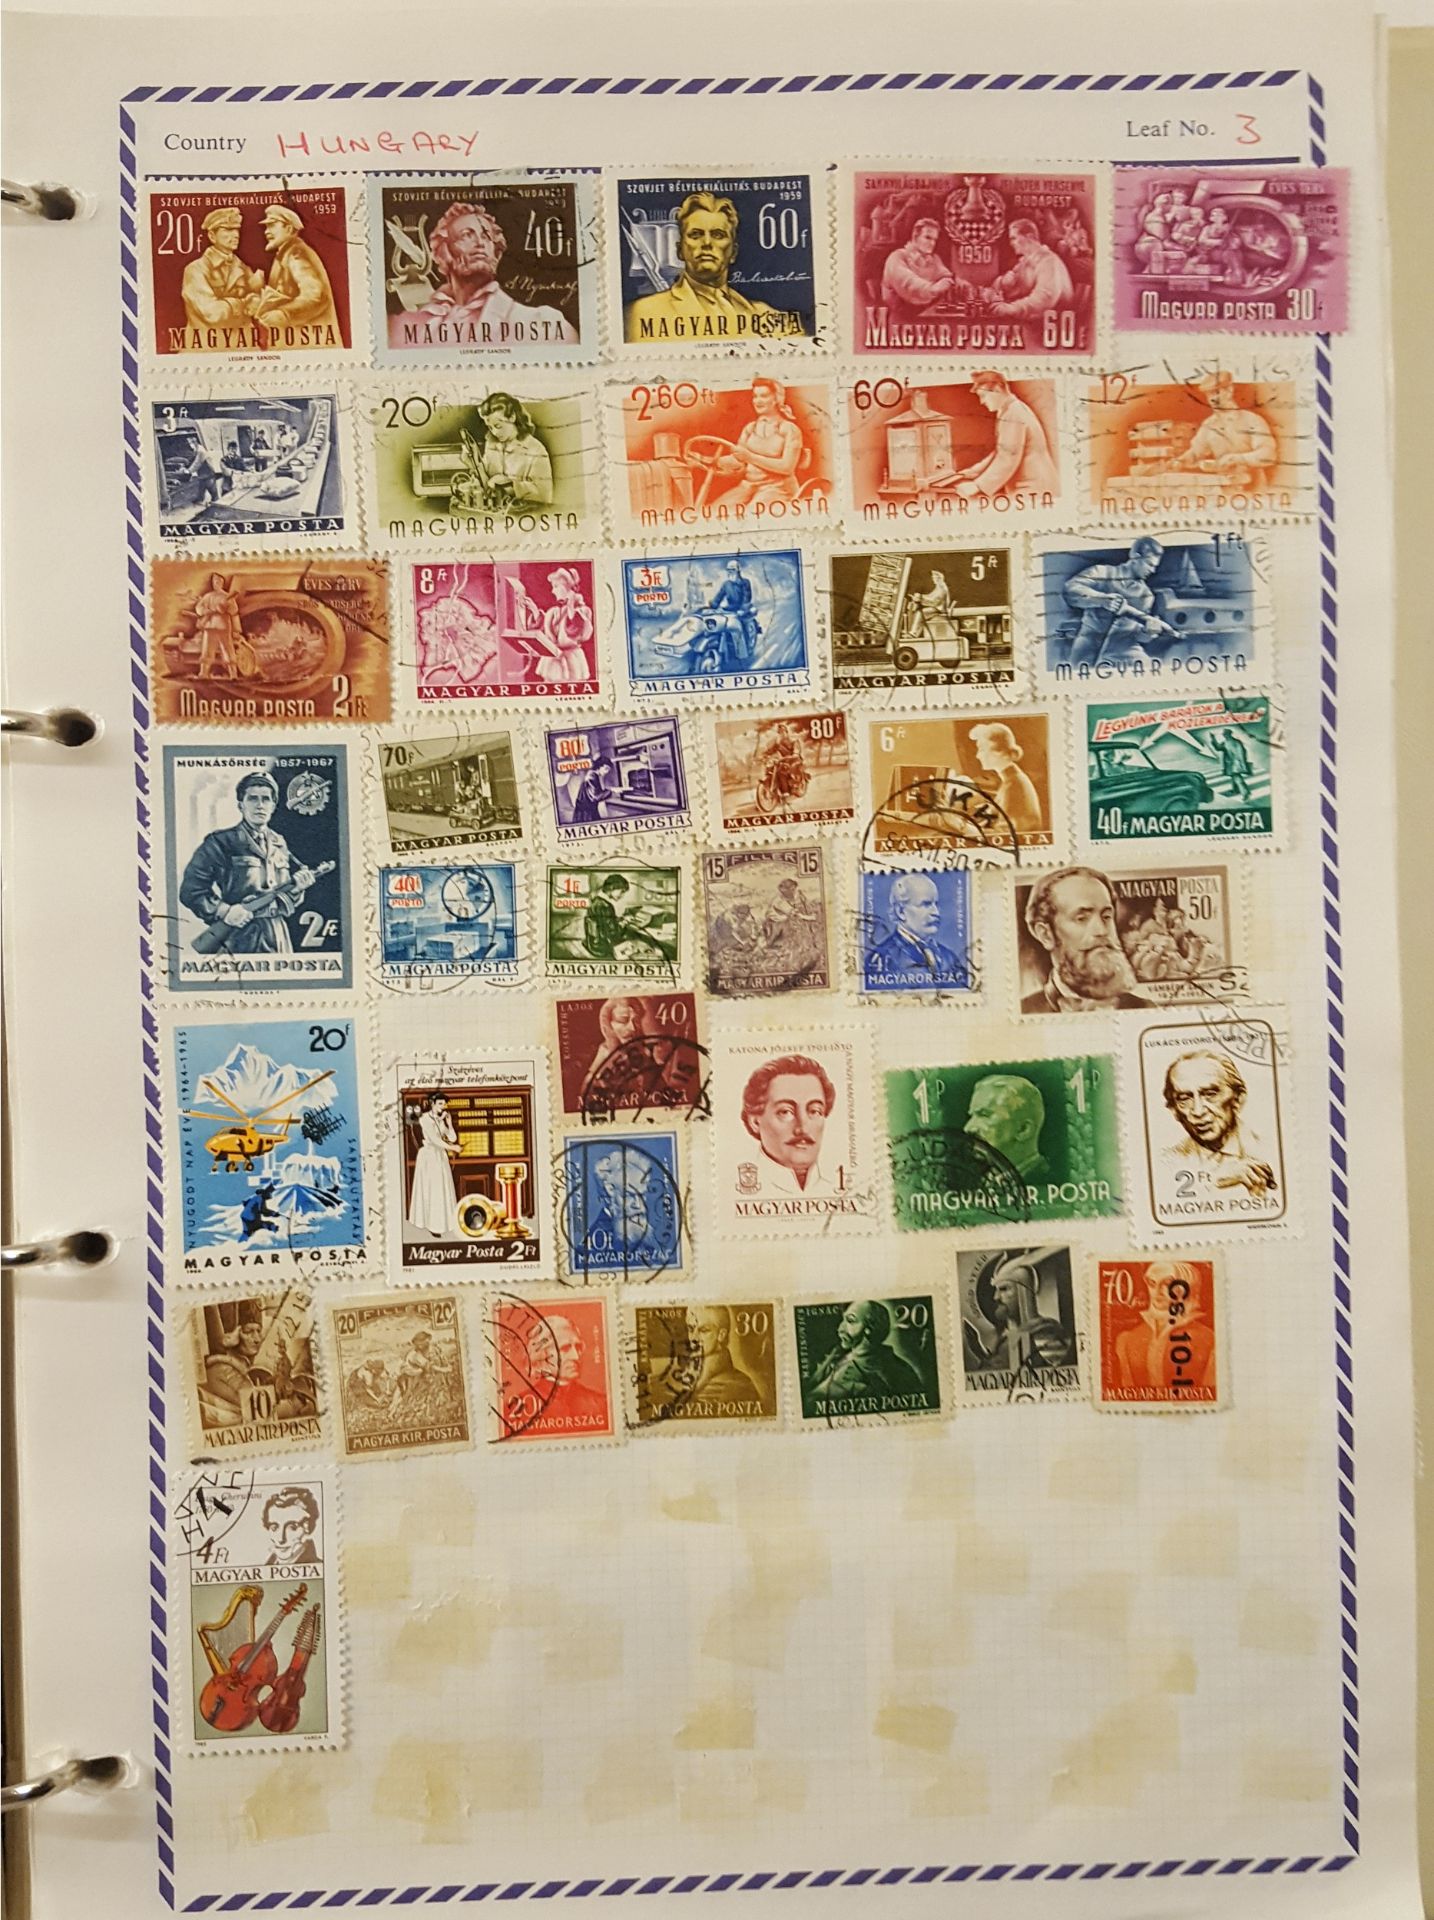 Philatelia Stamp Album Loose Leaf 600 Plus Great Britain Commonwealth & World Stamps - Image 4 of 8